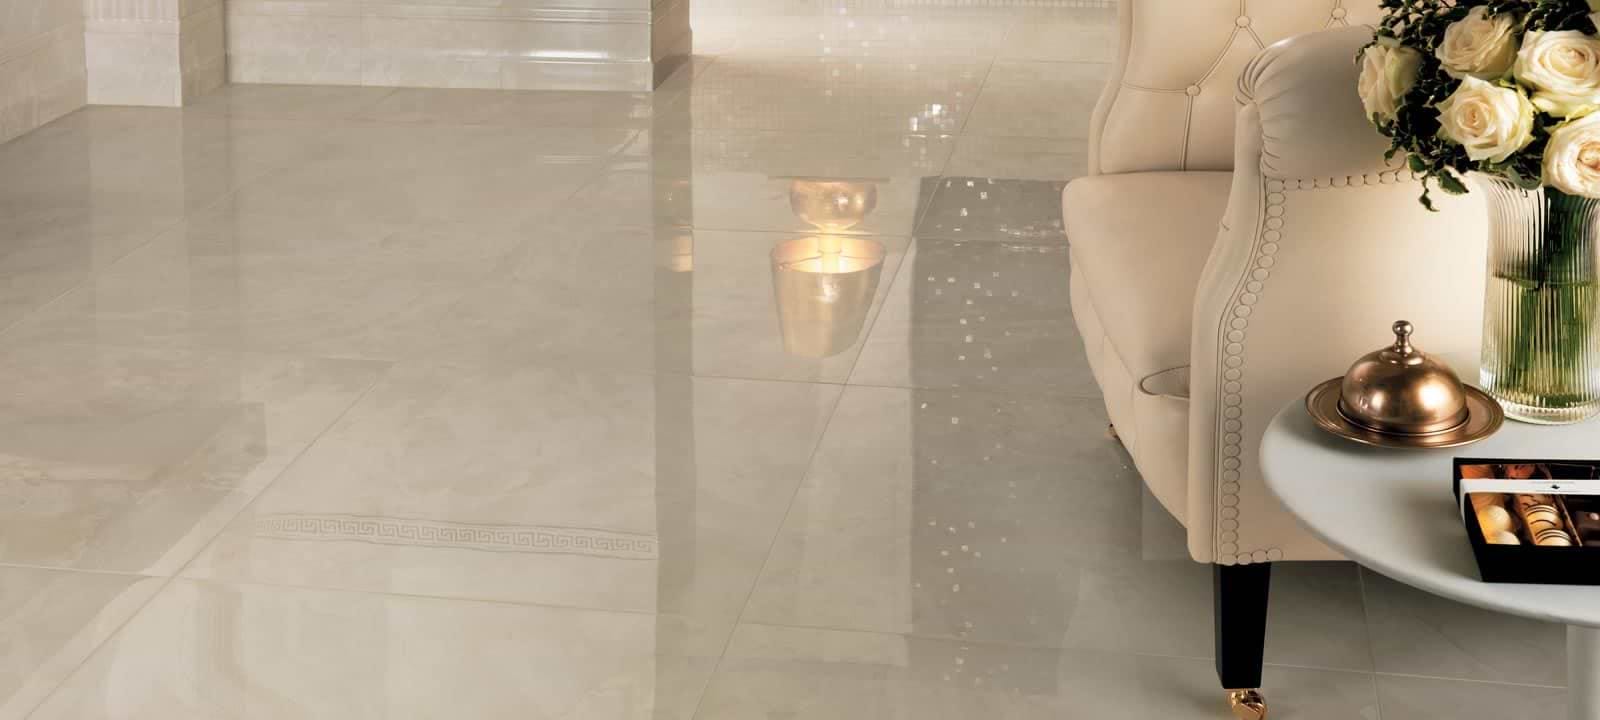 Minoli Wall & Floor Tiles 60 x 60 x 0.9cm Marvel Champagne Onyx Lappato 60 x 60cm